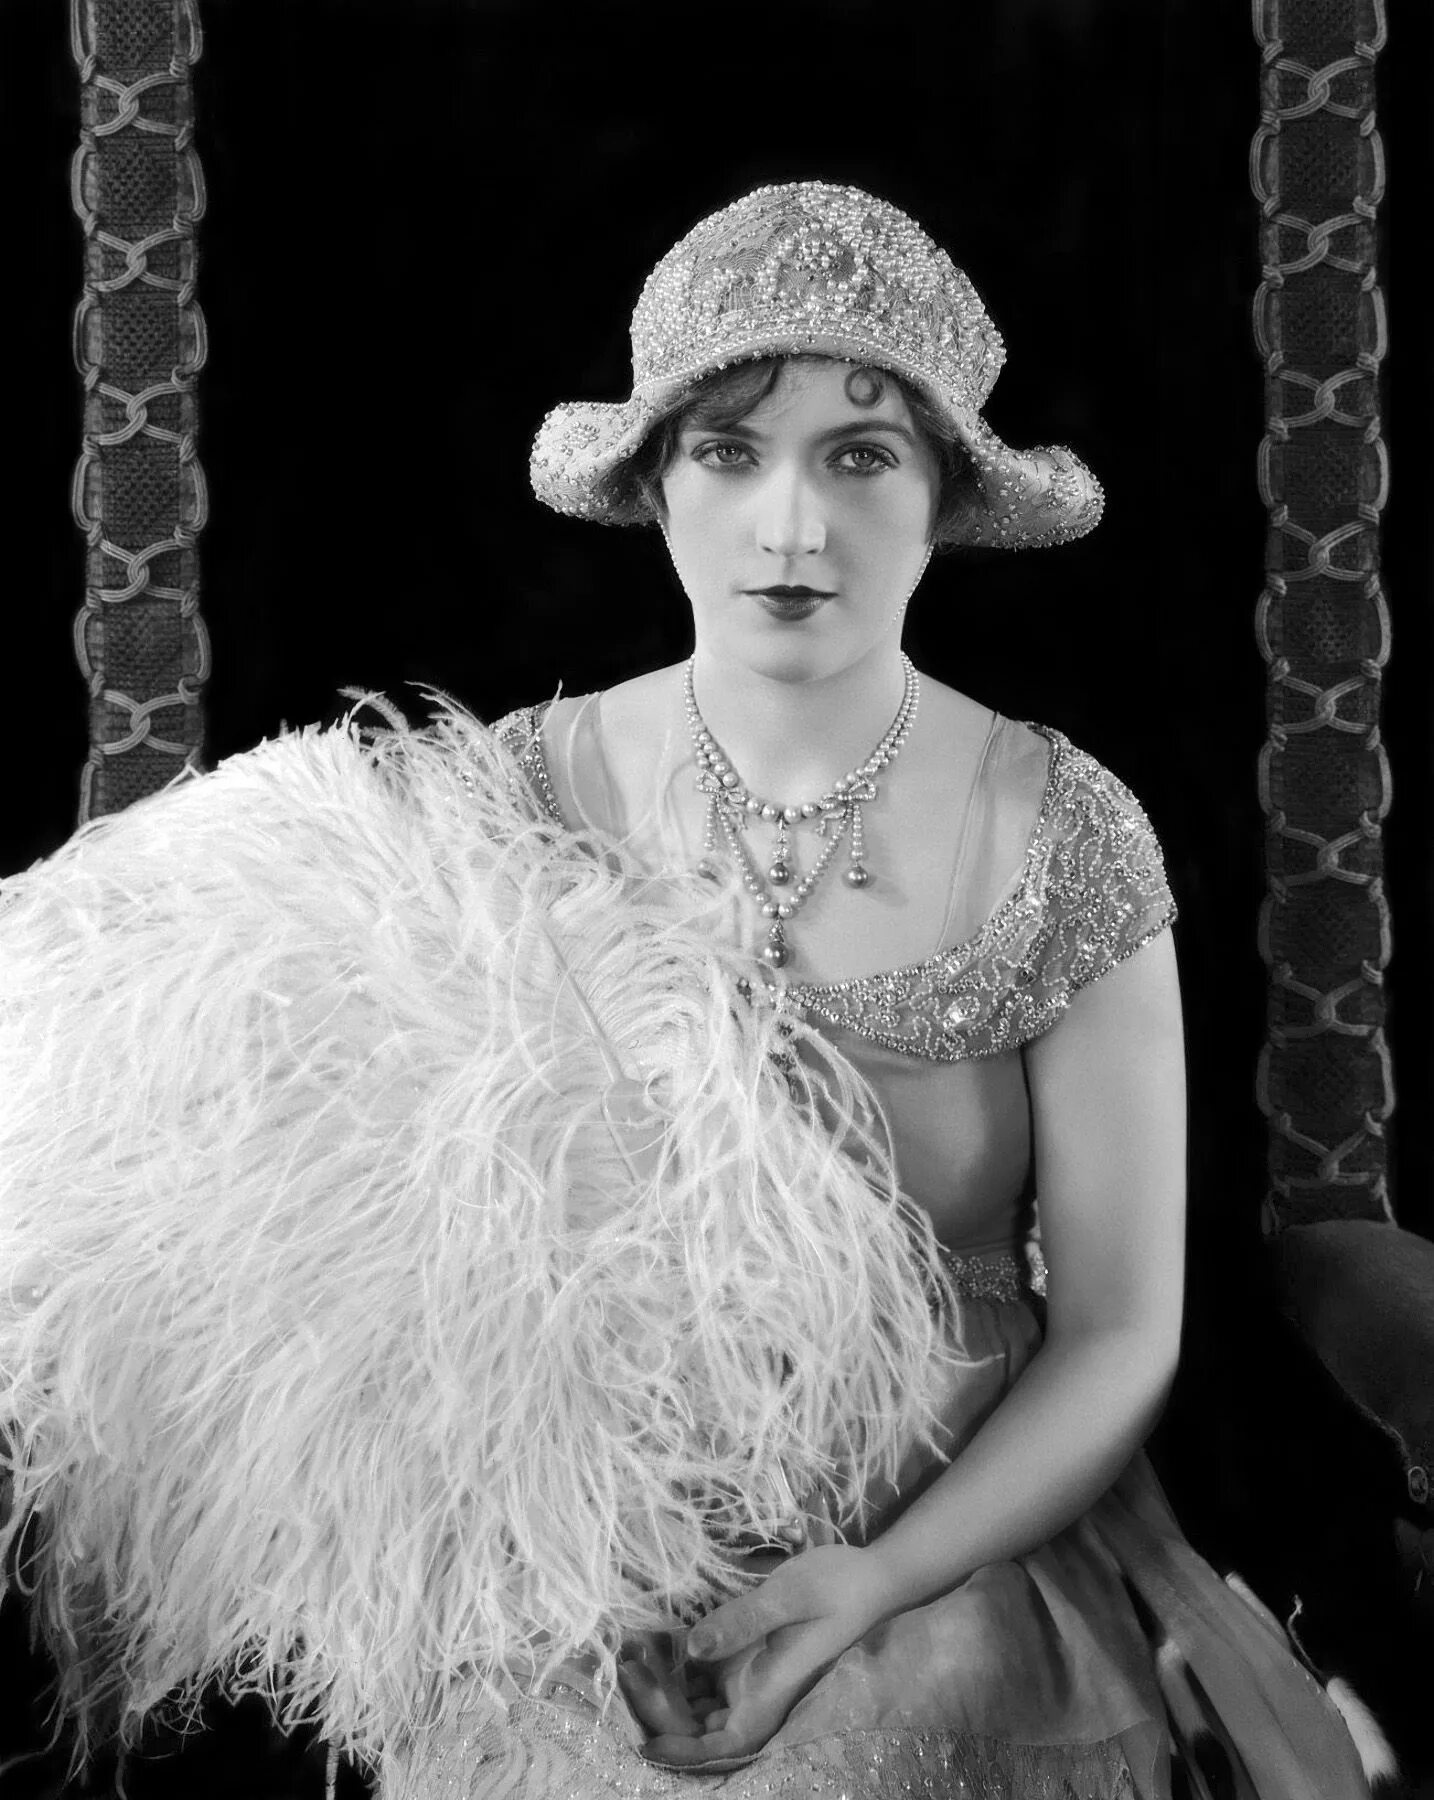 Мода 20х. Мода 1920-х годов. Марион Дэвис в 1920е. Мода 20х годов 20 века. Девушки из варьете Ziegfeld Follies.